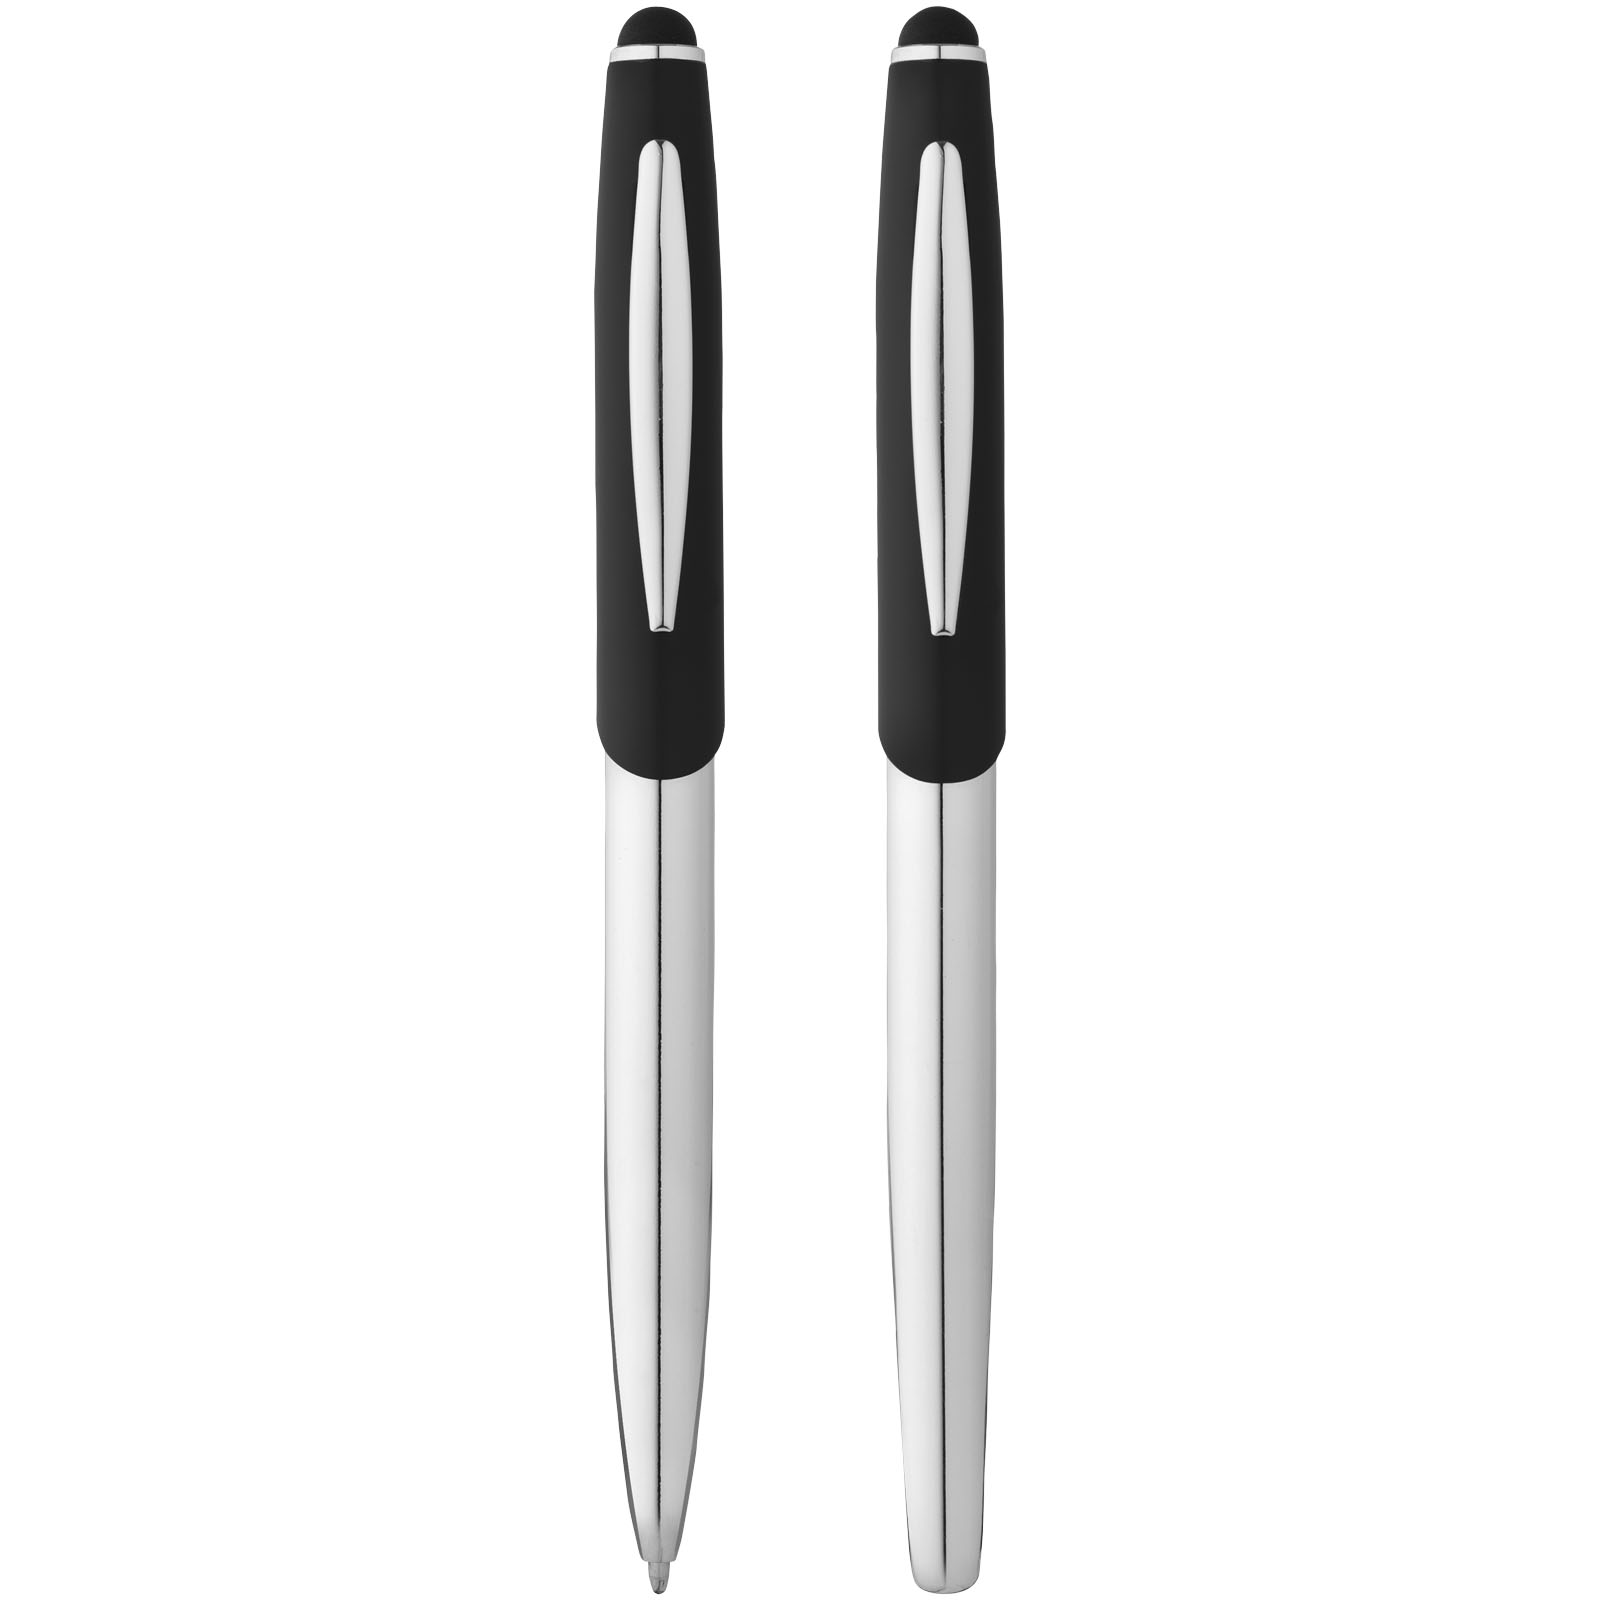 Advertising Ballpoint Pens - Geneva stylus ballpoint pen and rollerball pen set - 2